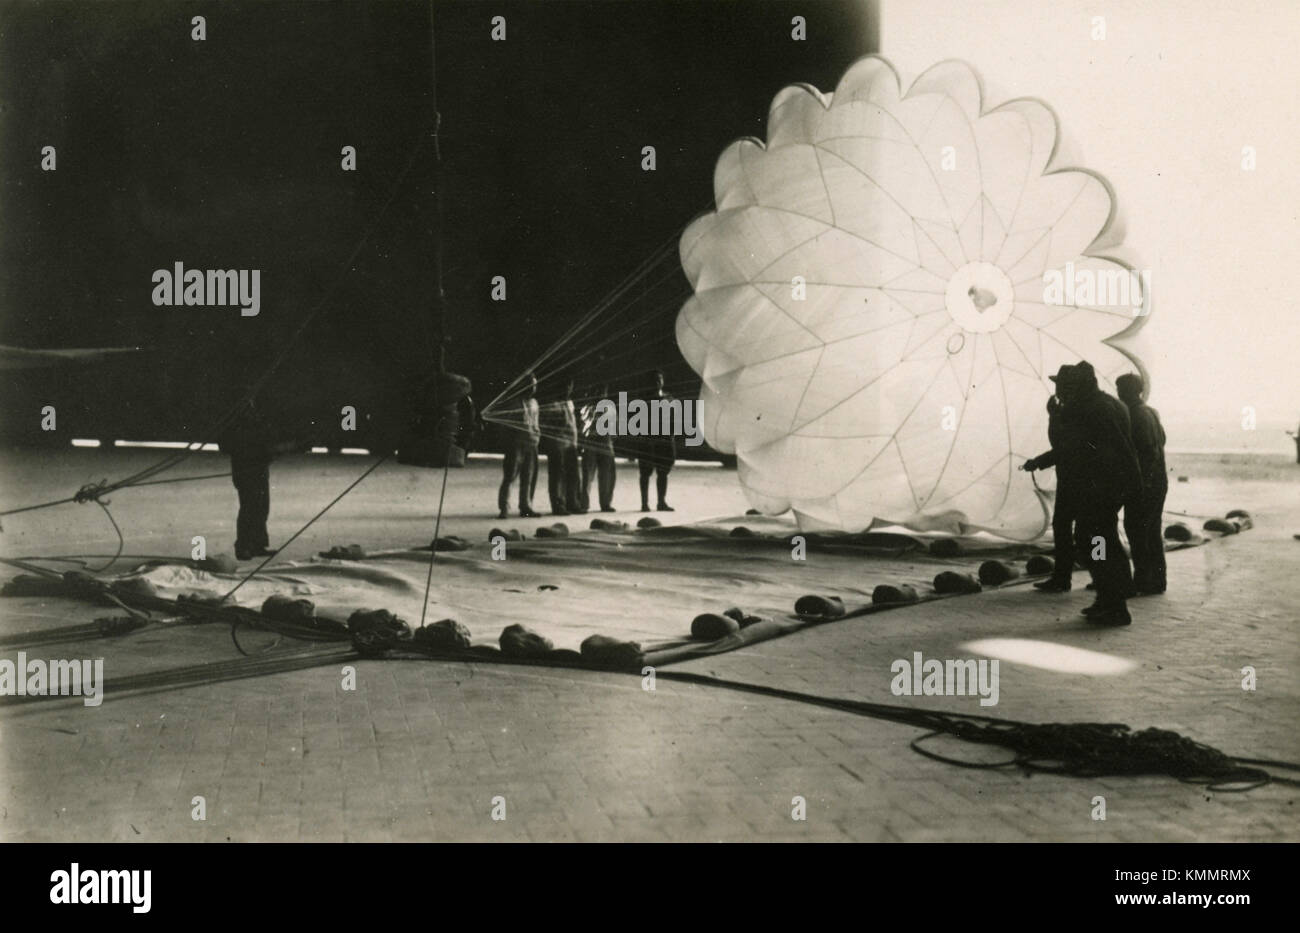 Testing parachutes, Italy 1940s Stock Photo